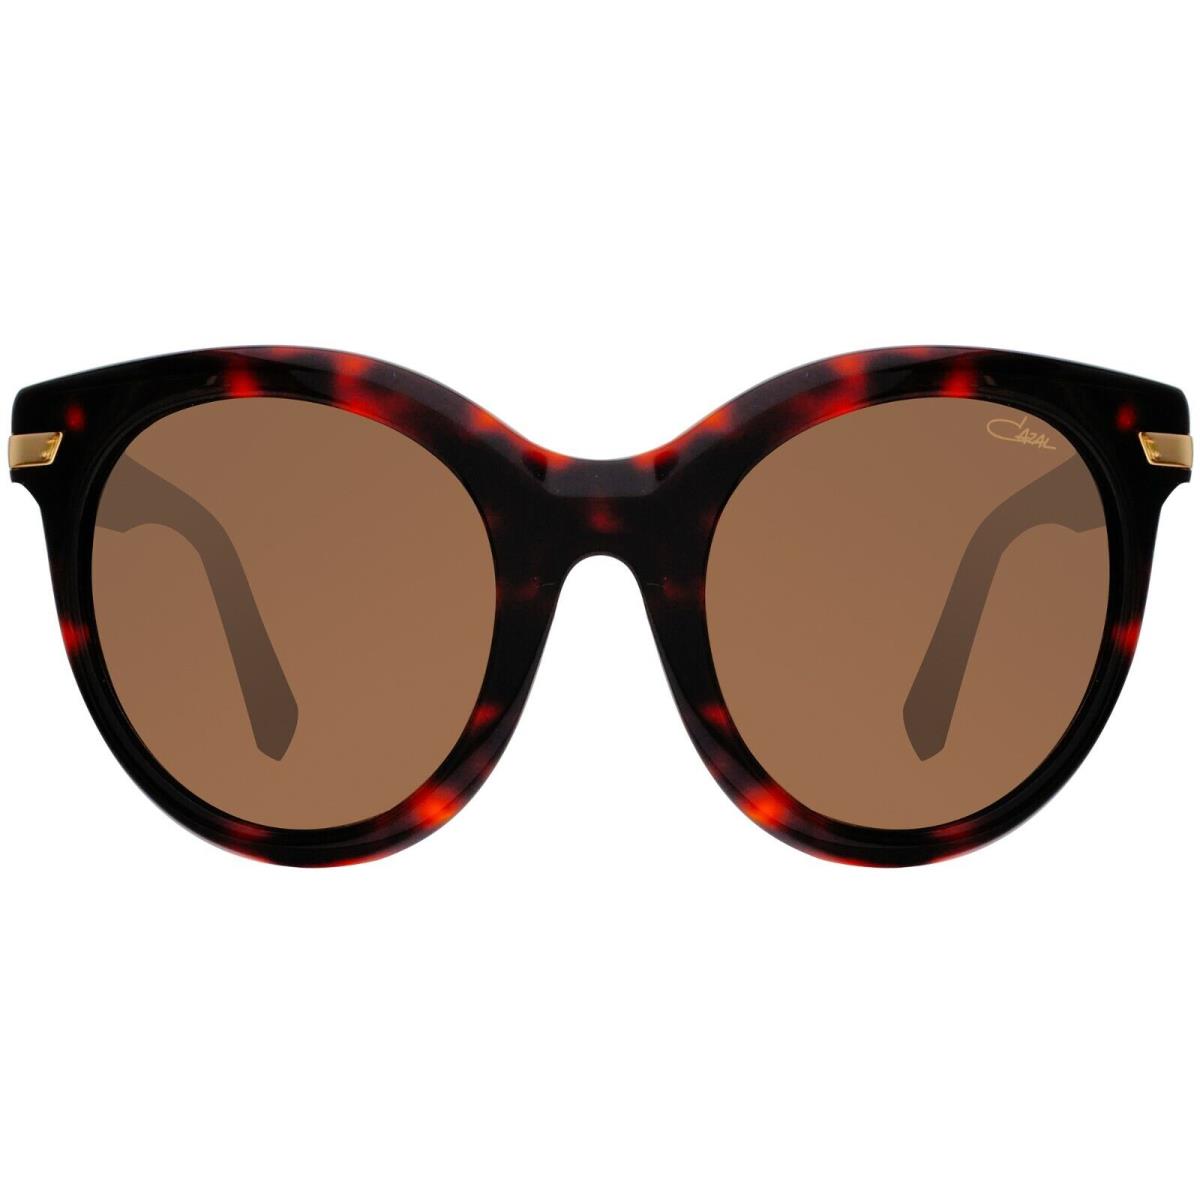 Cazal 8500 Shiny Tortoise/brown Shaded 002 Sunglasses